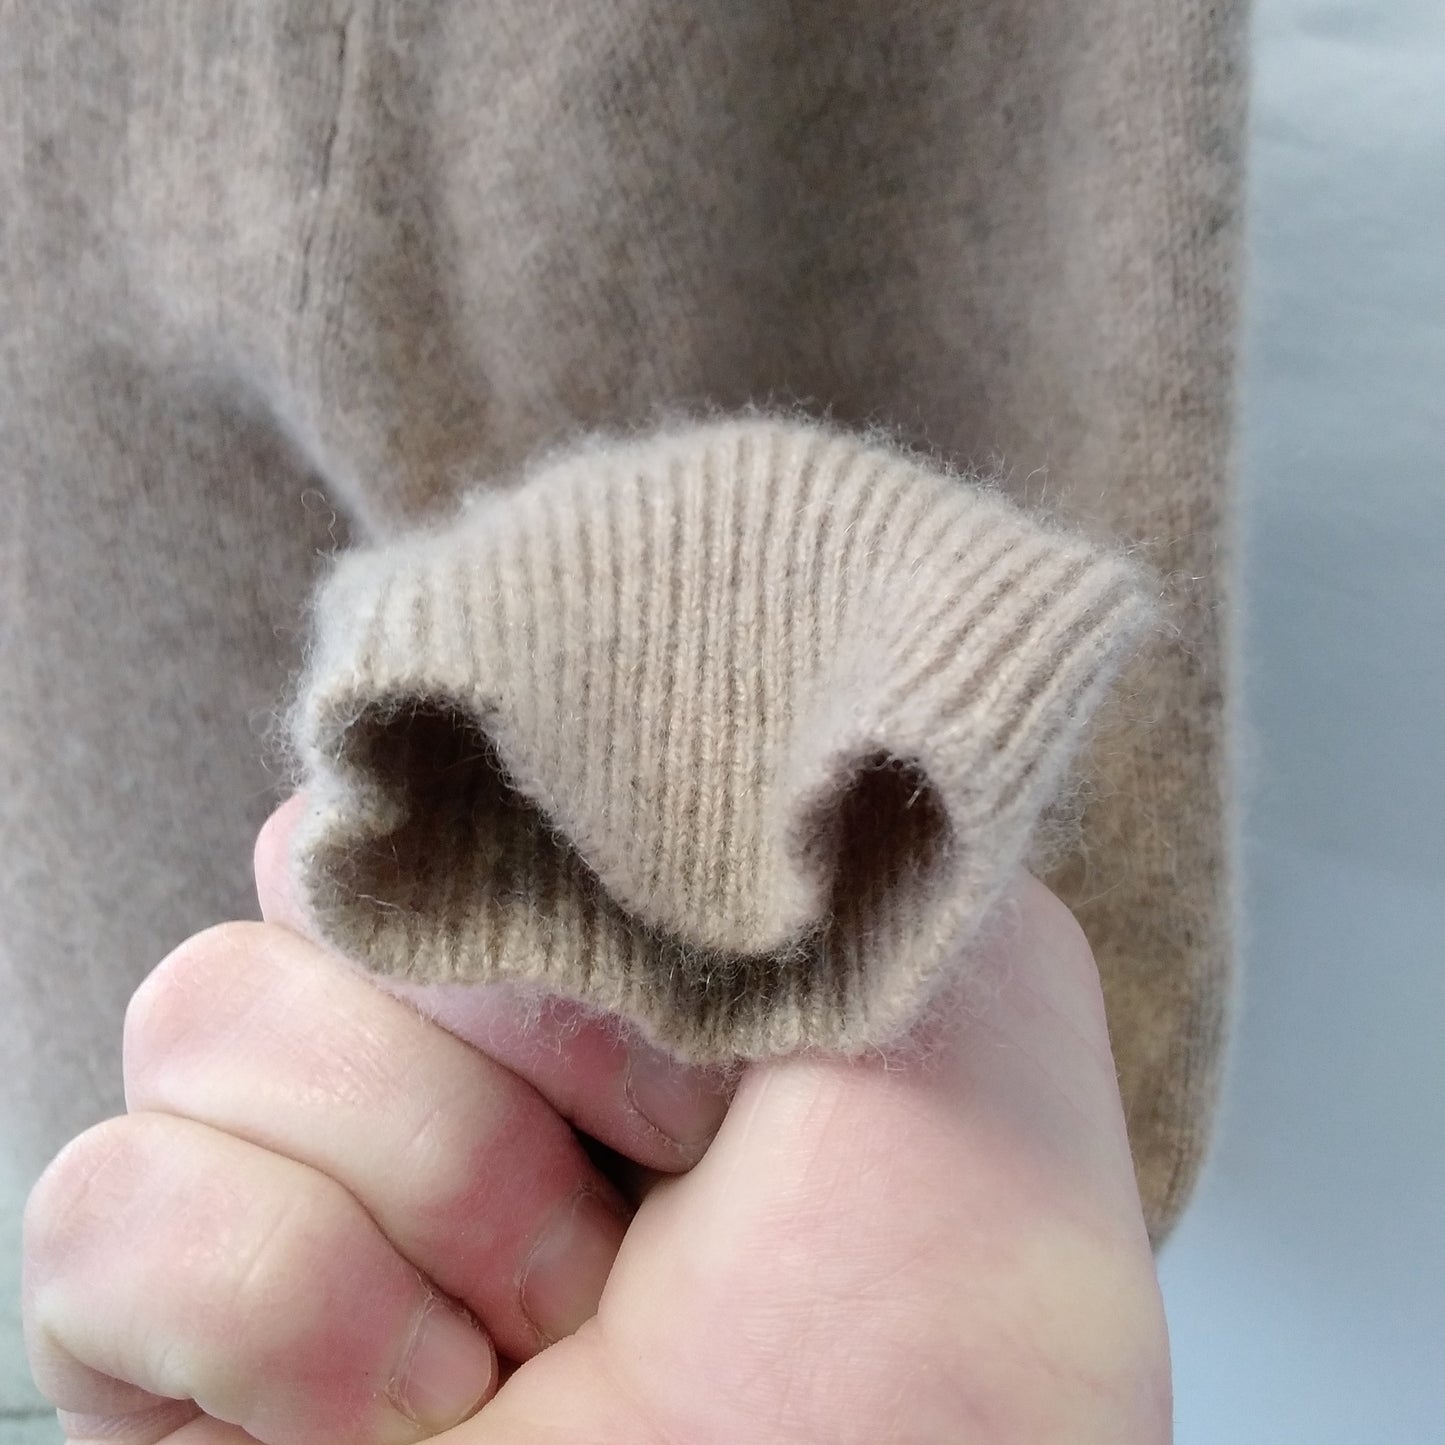 Article 365 Men's Brown Cashmere Sweater - Size: L